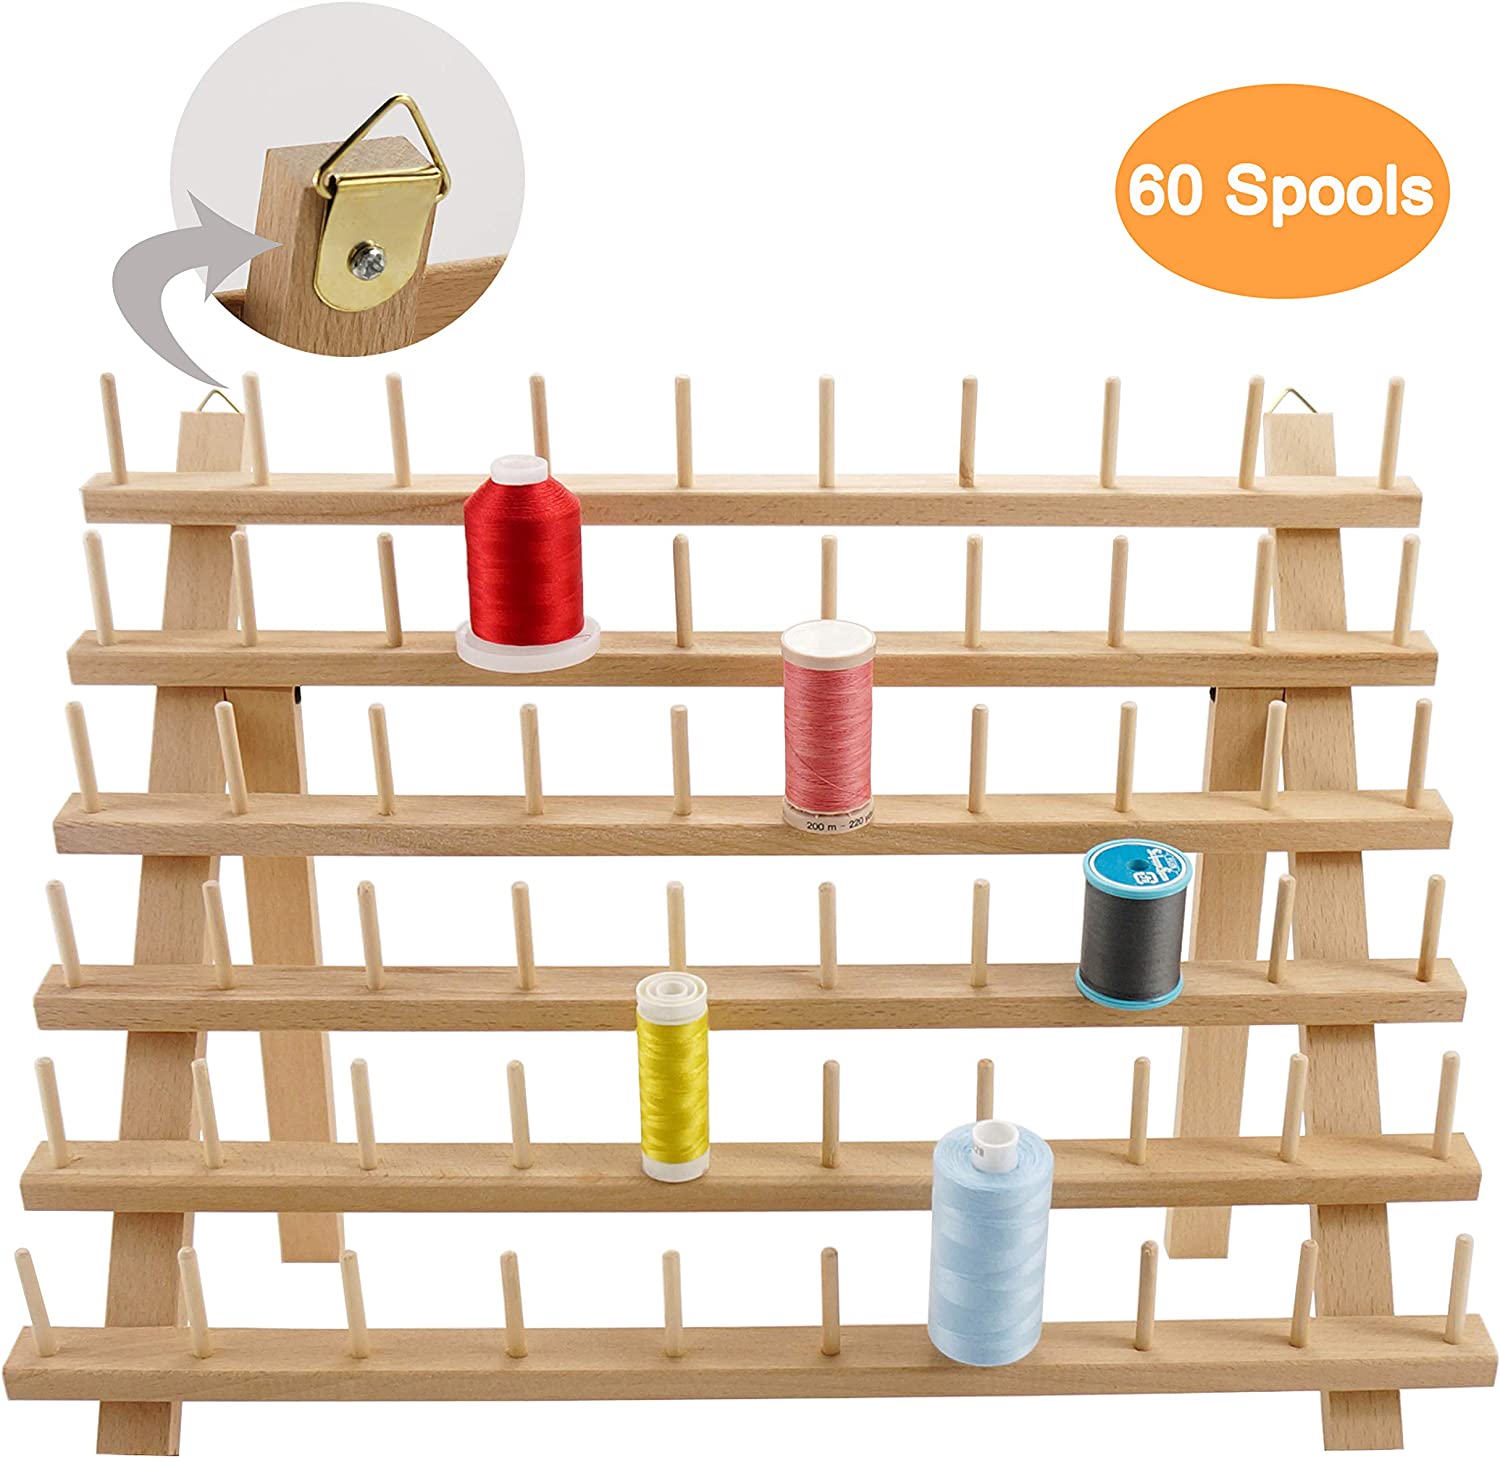 New brothread 60 Spools Wooden Thread Rack